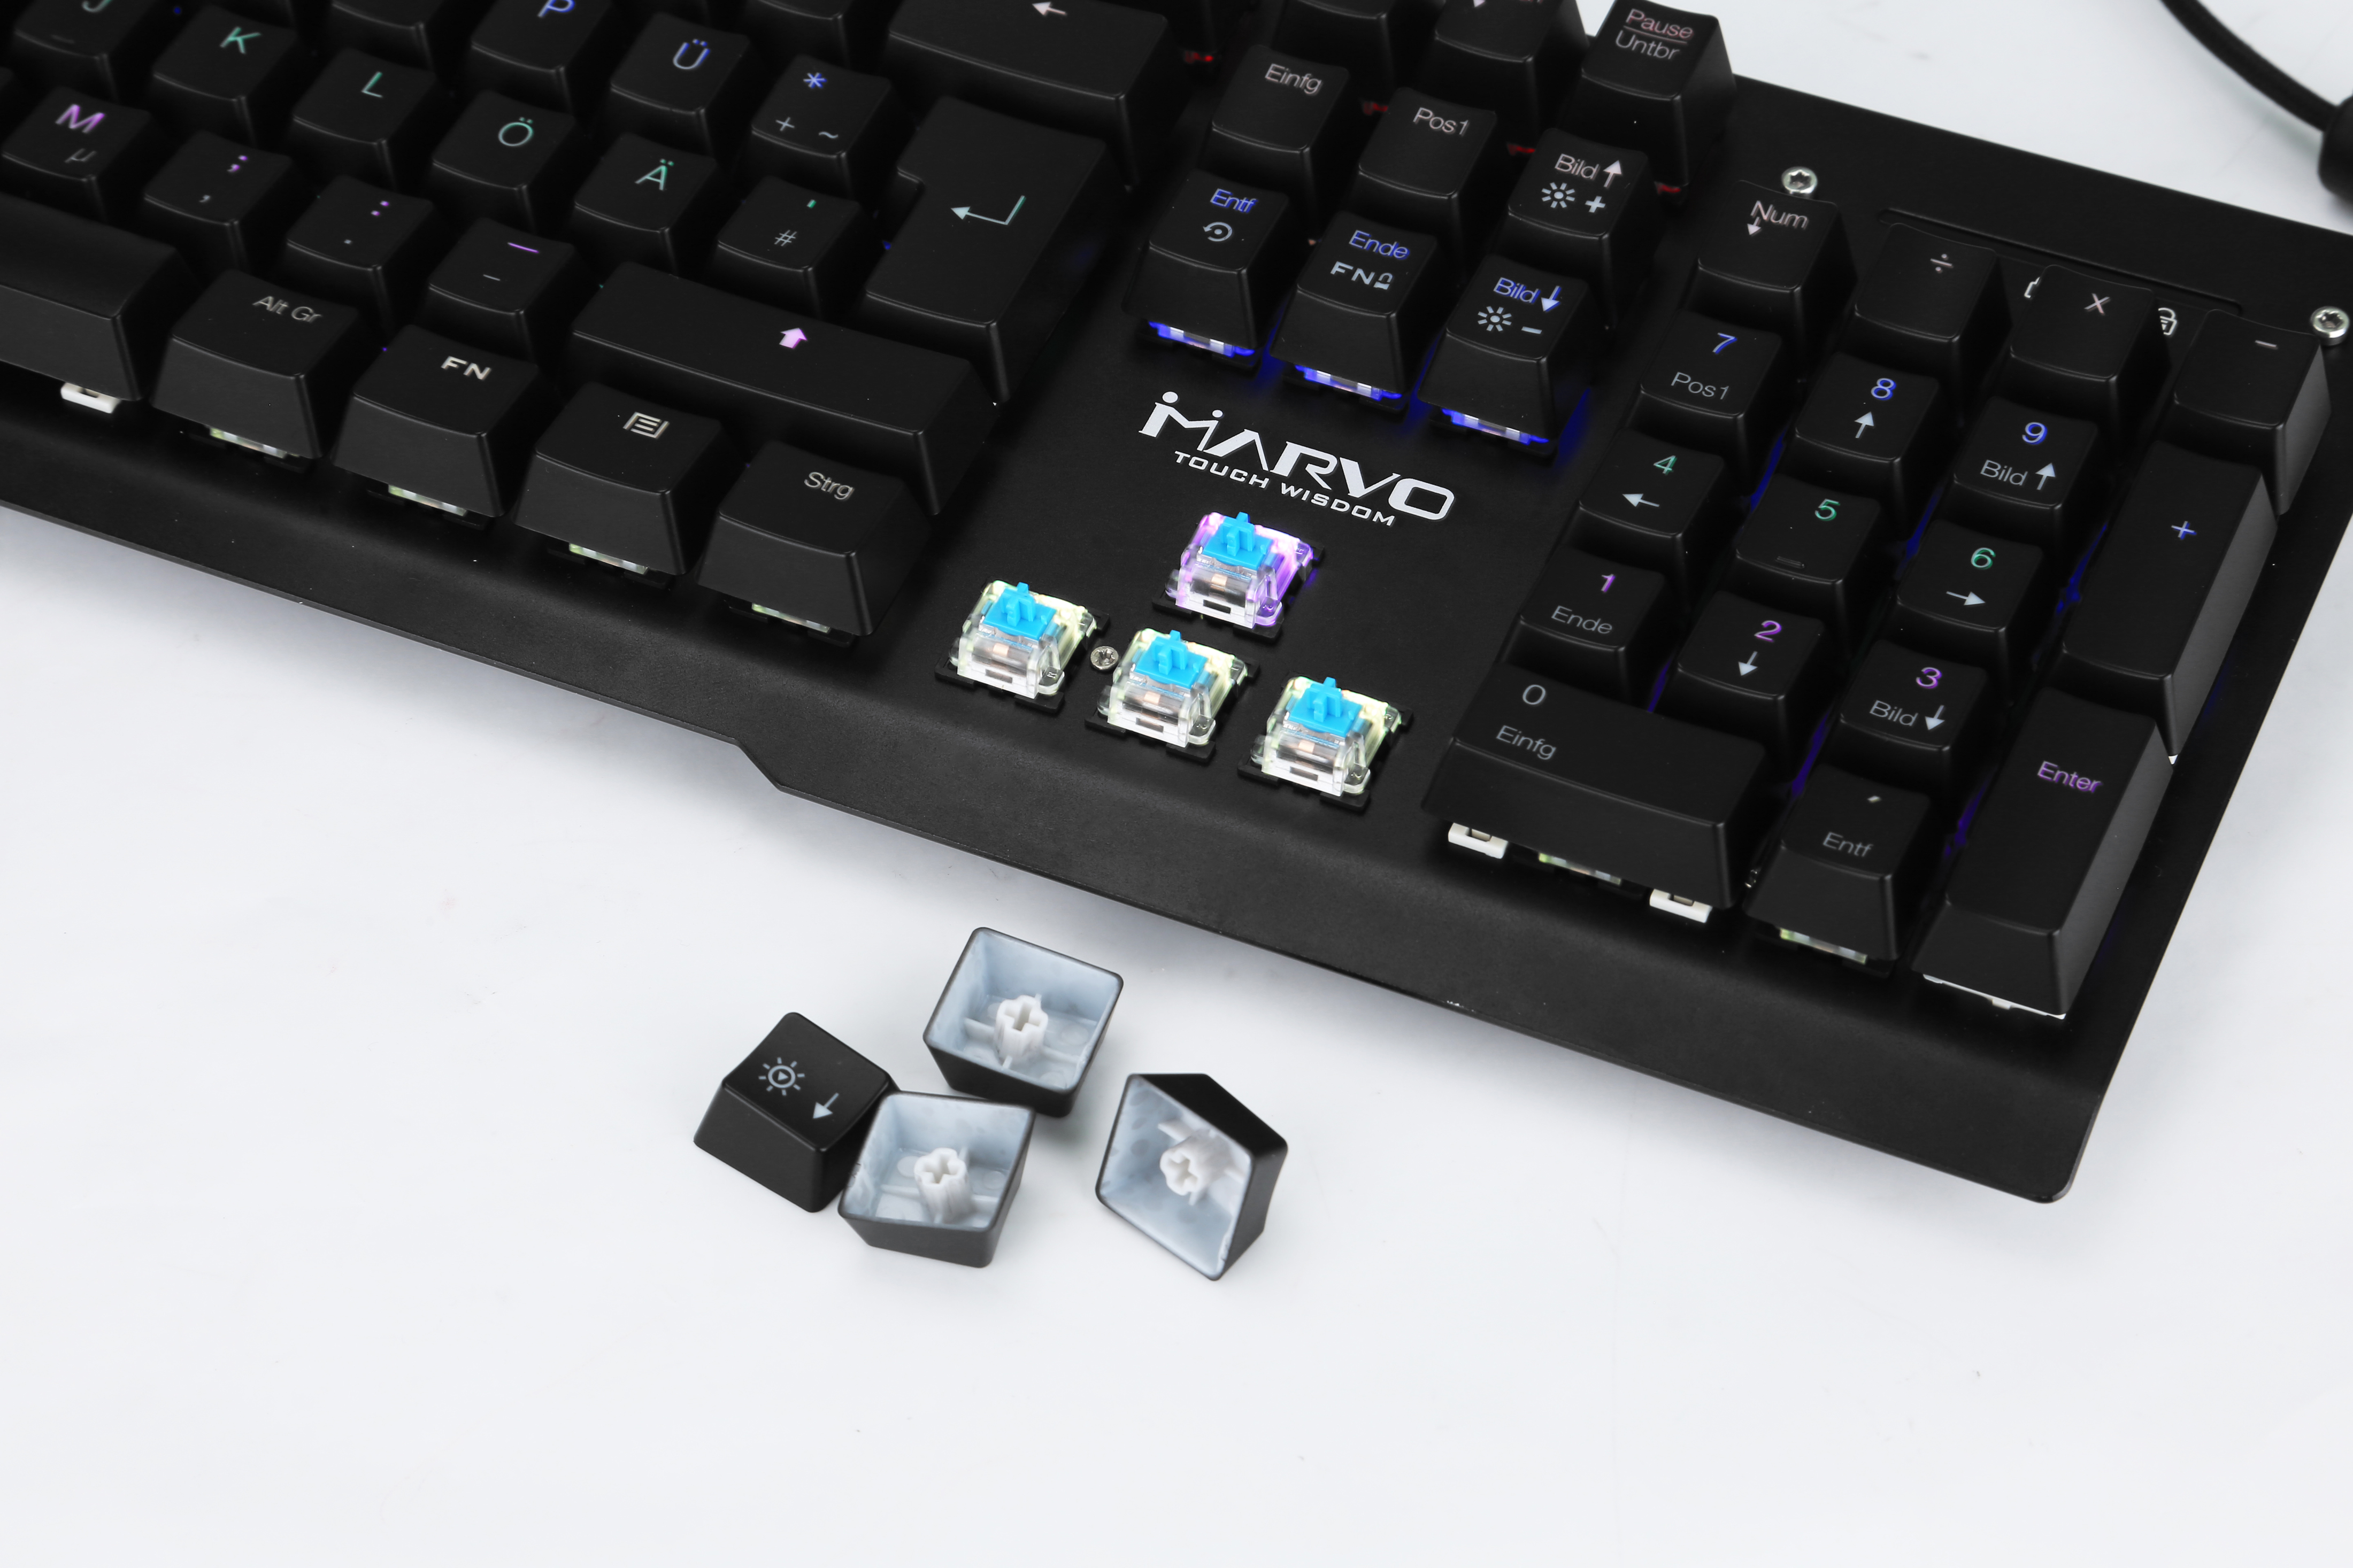 Cherry Blue Tastatur, MARVO KG943G, Mechanisch, Gaming MX